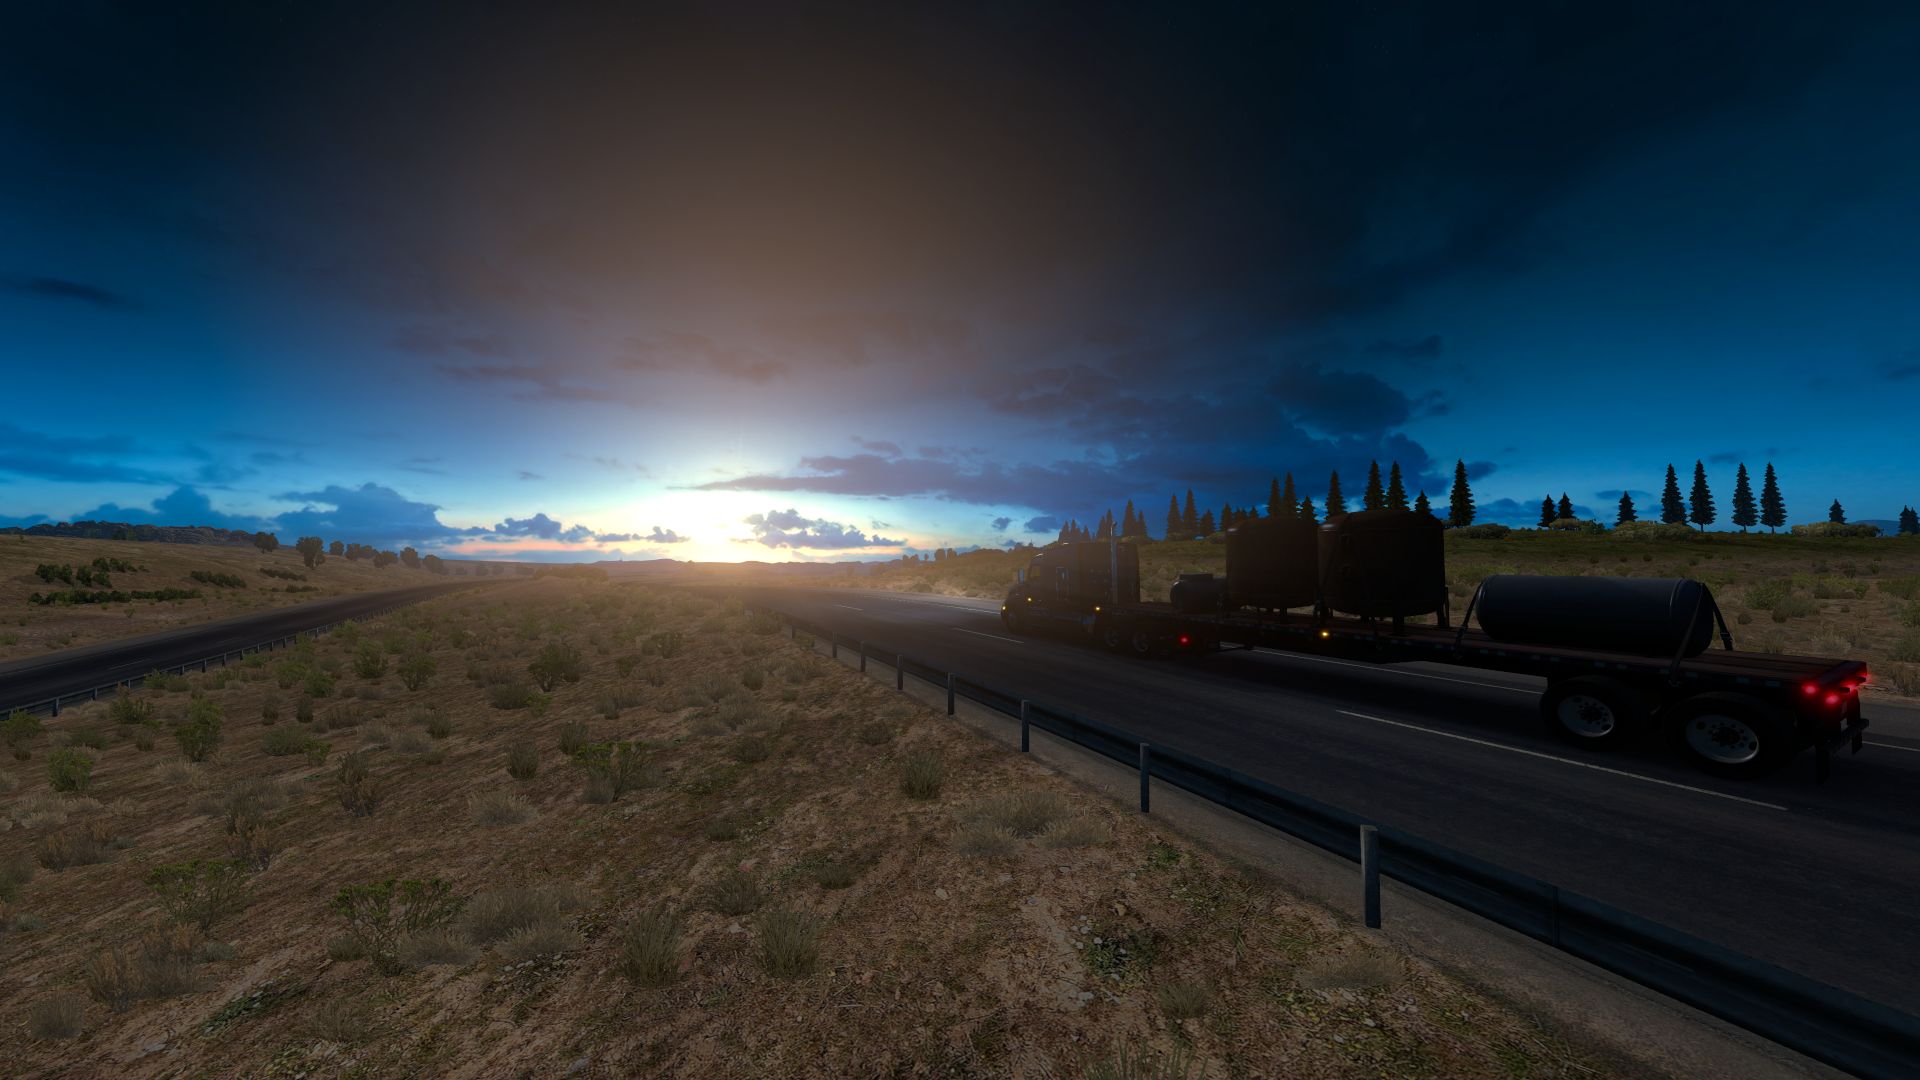 Télécharger des fonds d'écran American Truck Simulator HD